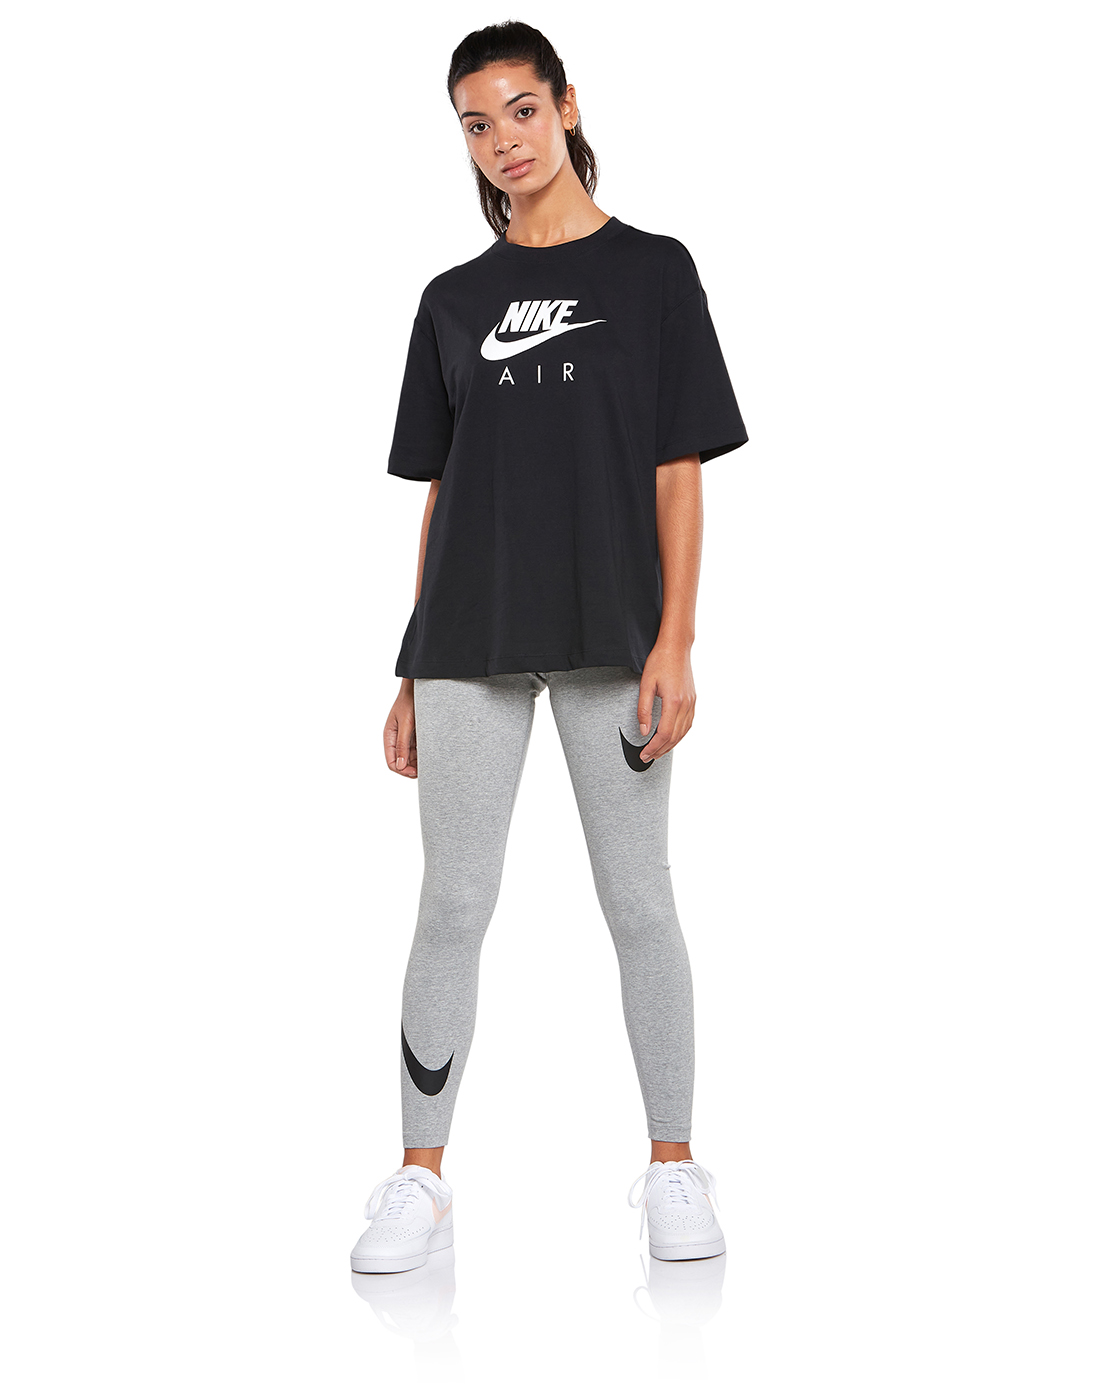 Nike Womens Air Boyfriend T-Shirt - Black | Life Style Sports IE